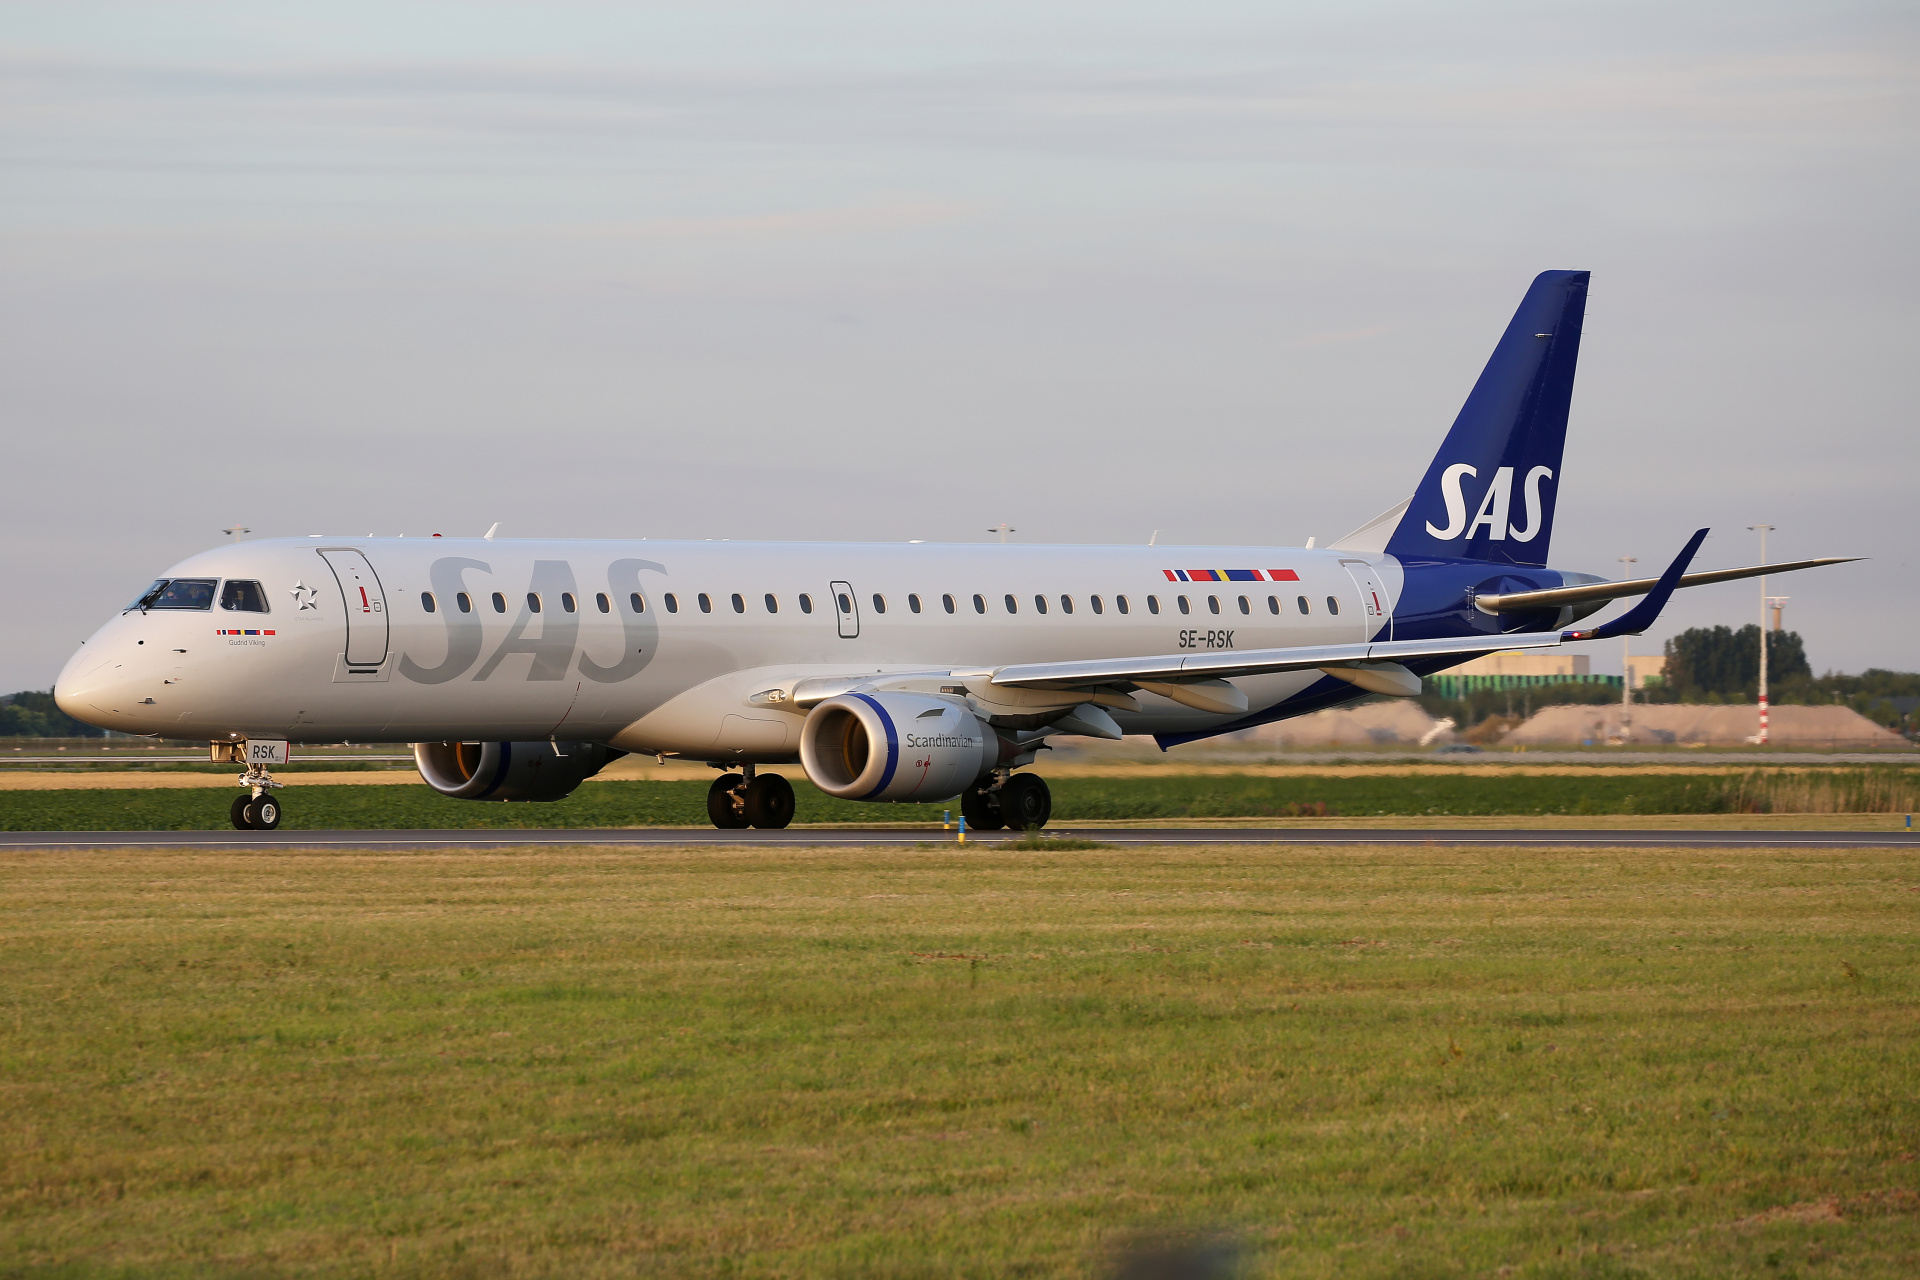 SE-RSK, SAS Scandinavian Airlines (SAS Link) (Aircraft » Schiphol Spotting » Embraer E195)